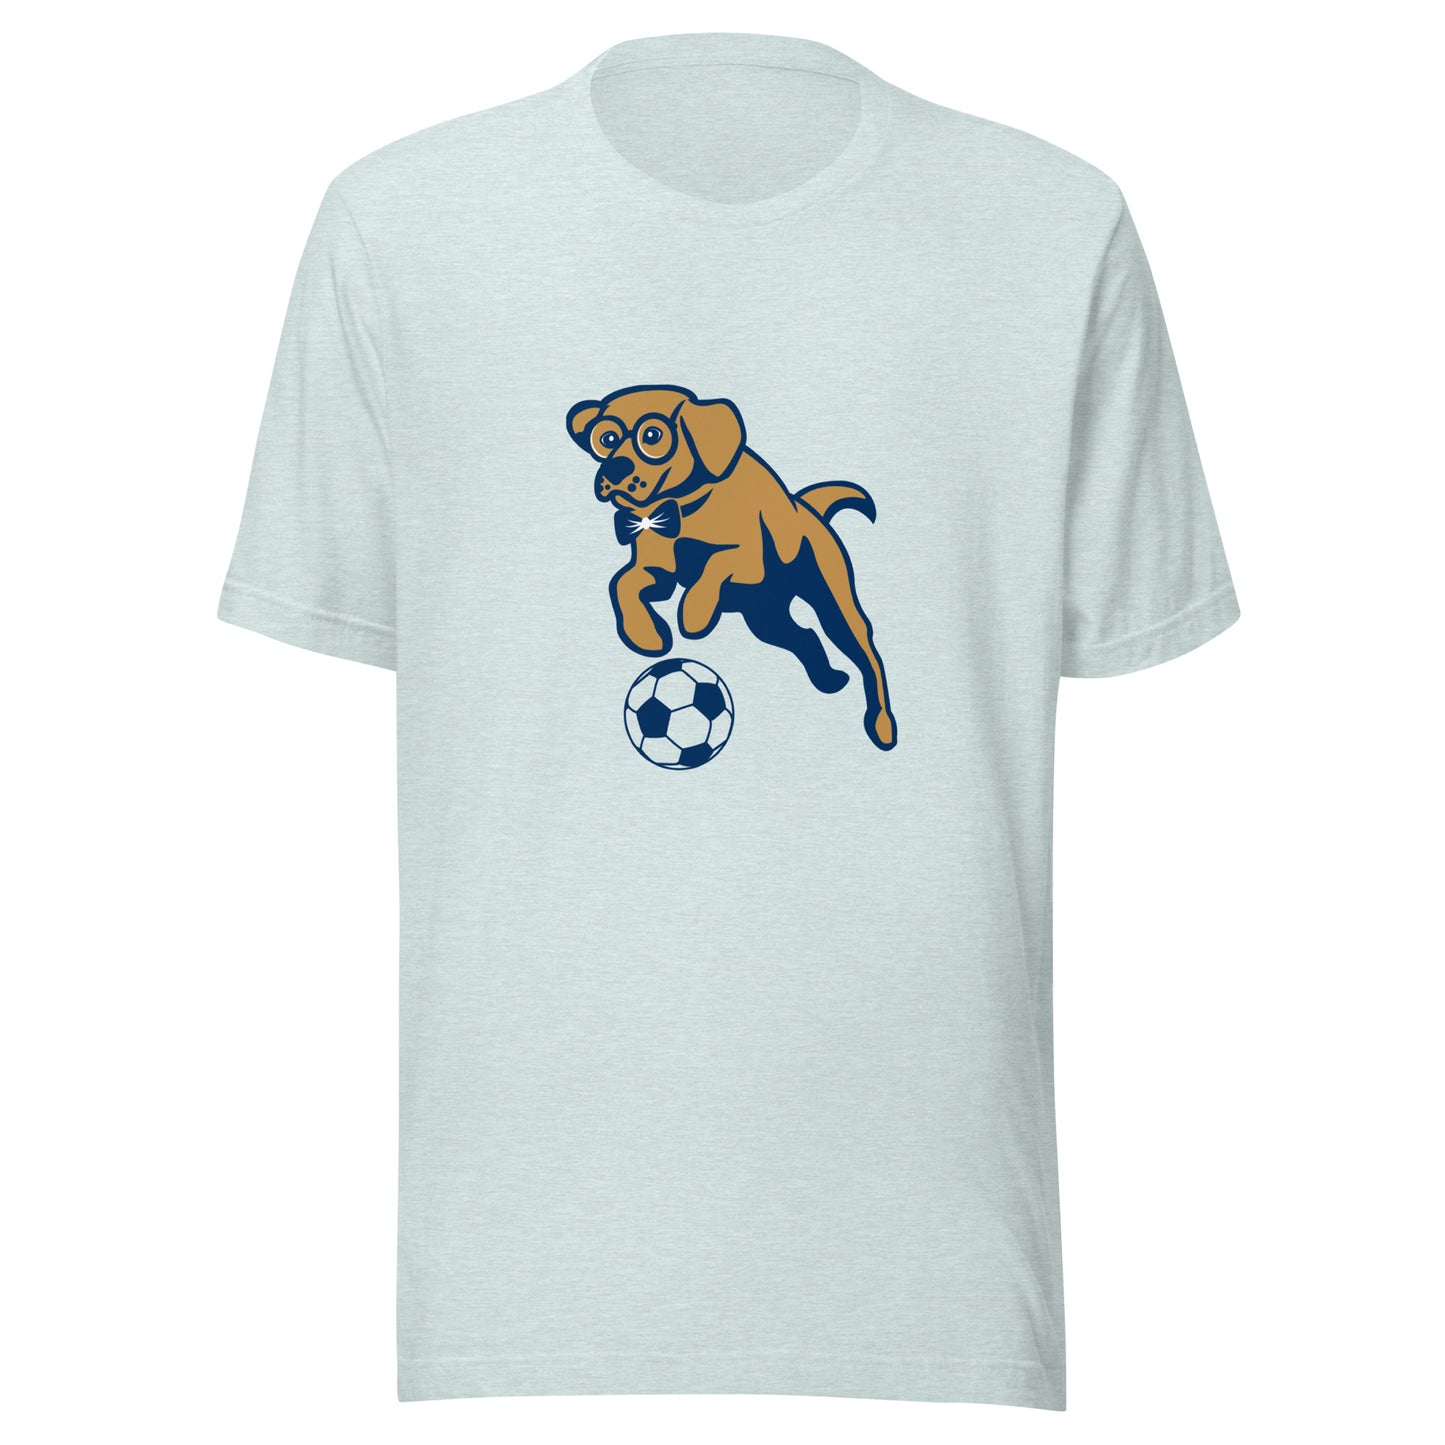 Soccer Sports T-shirt